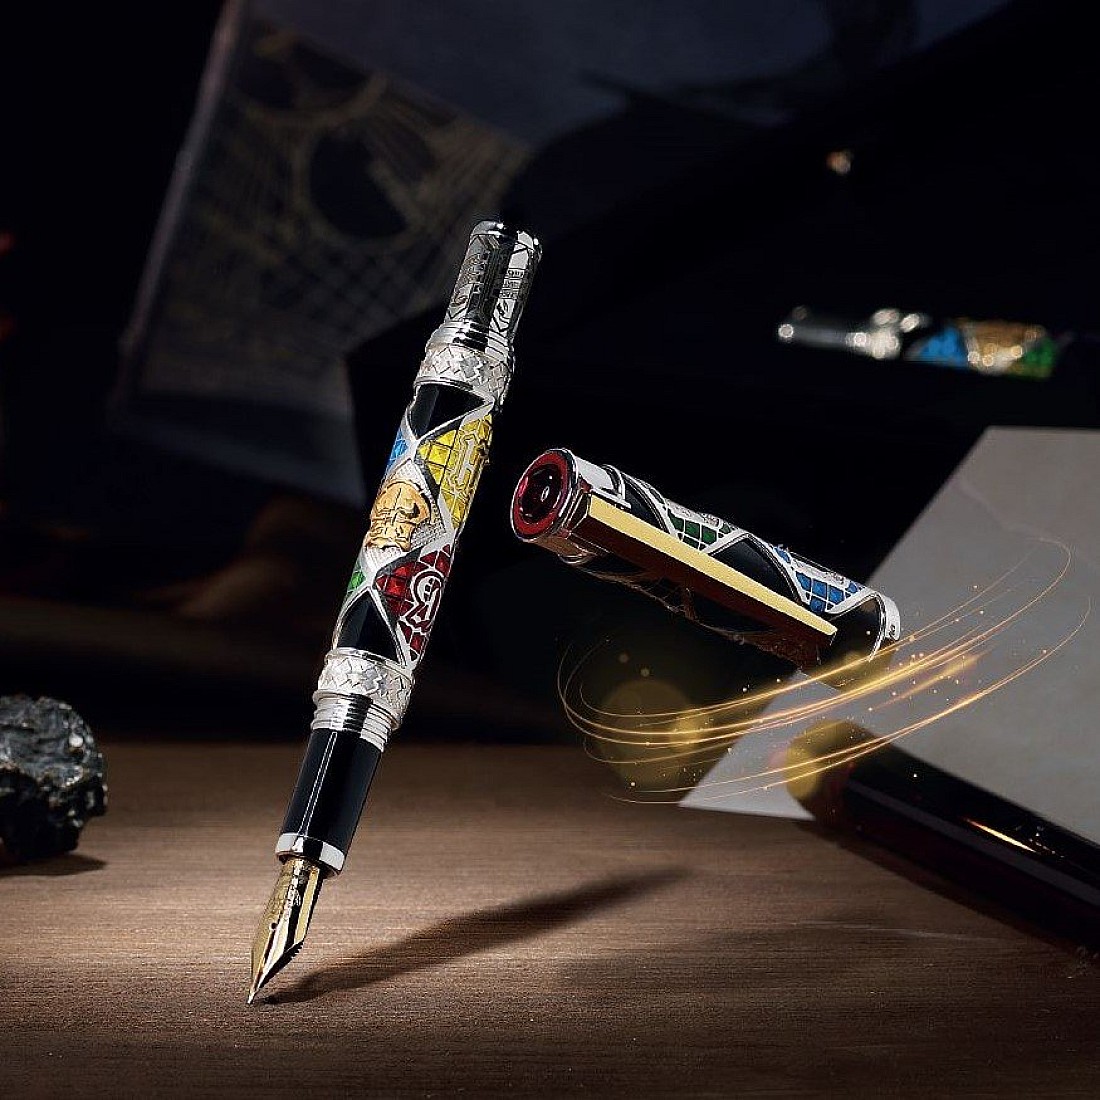 Harry Potter Slytherin House Magic Pen Ballpoint Collectible Novelty Xmas Gift